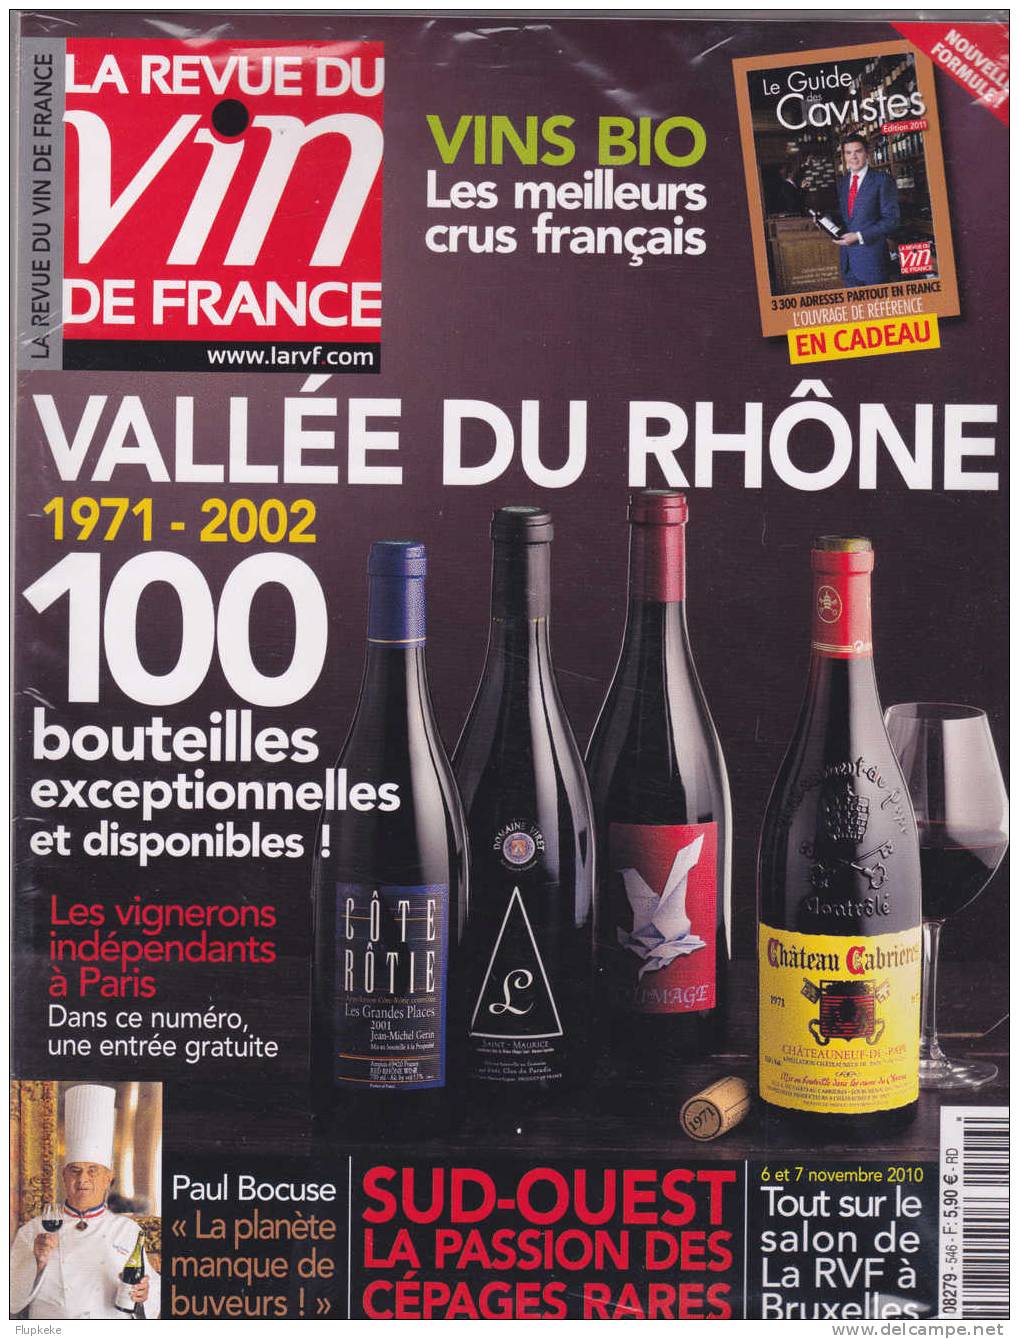 La Revue Du Vin De France 546 Novembre 2010 Vallée Du Rhône 1971-2002 + Guide Des Cavistes Édition 2011 - Culinaria & Vinos